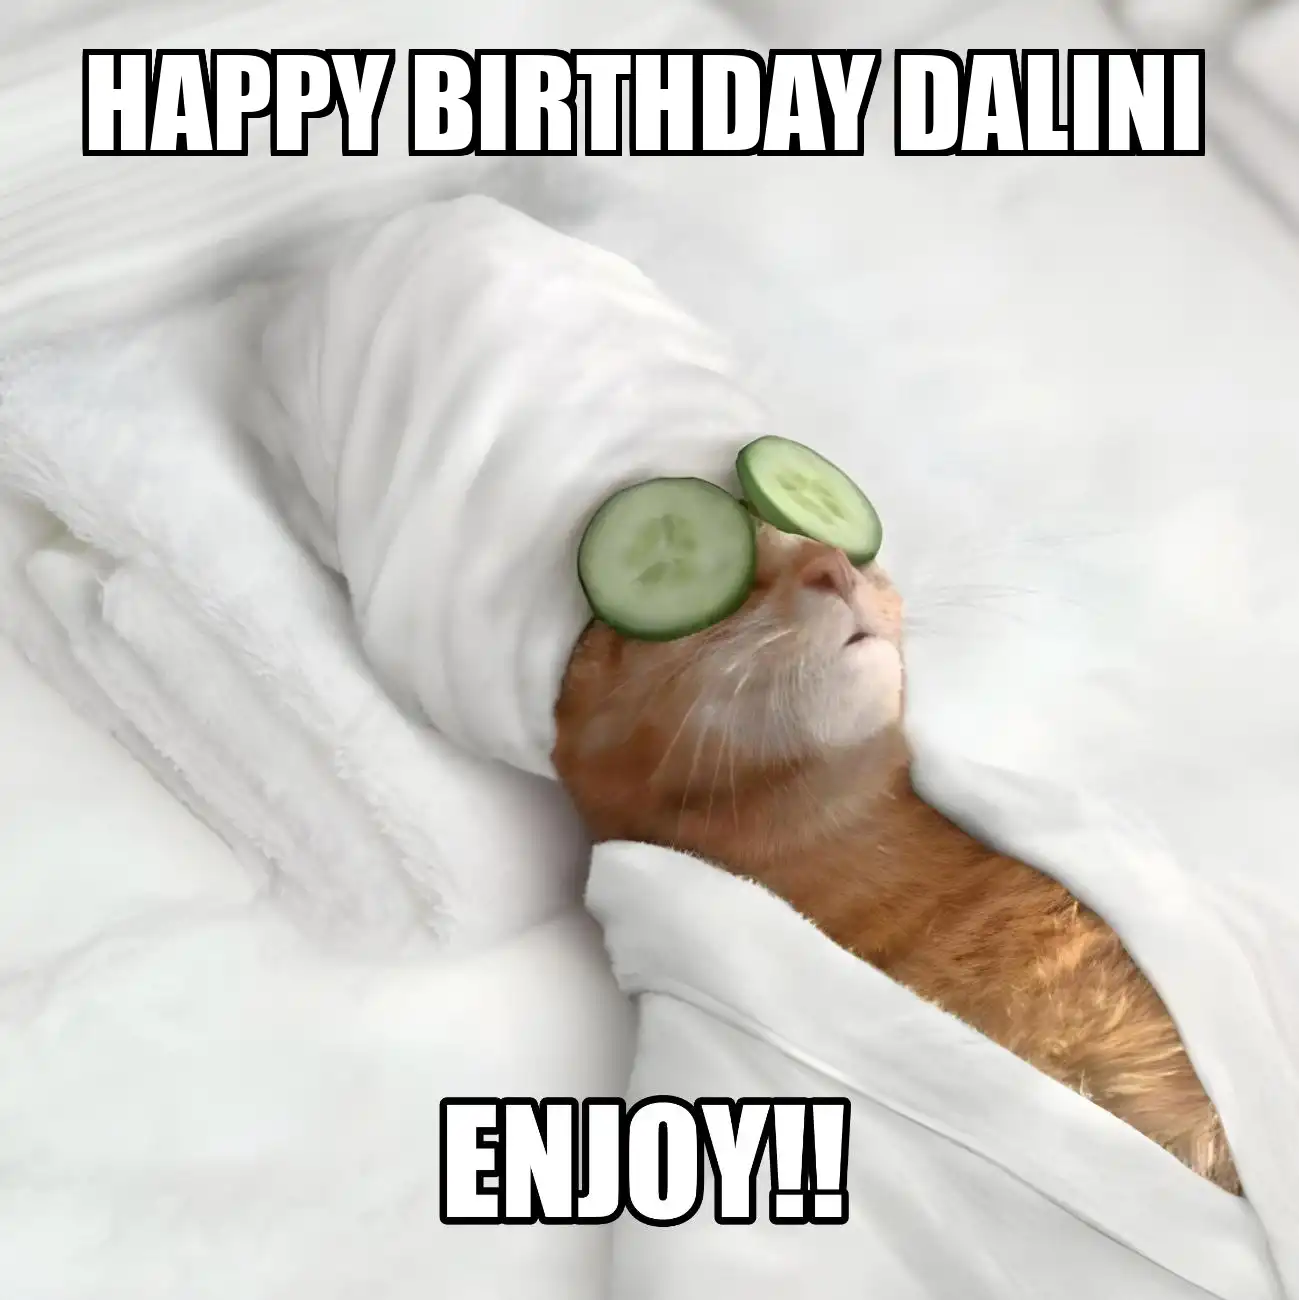 Happy Birthday Dalini Enjoy Cat Meme